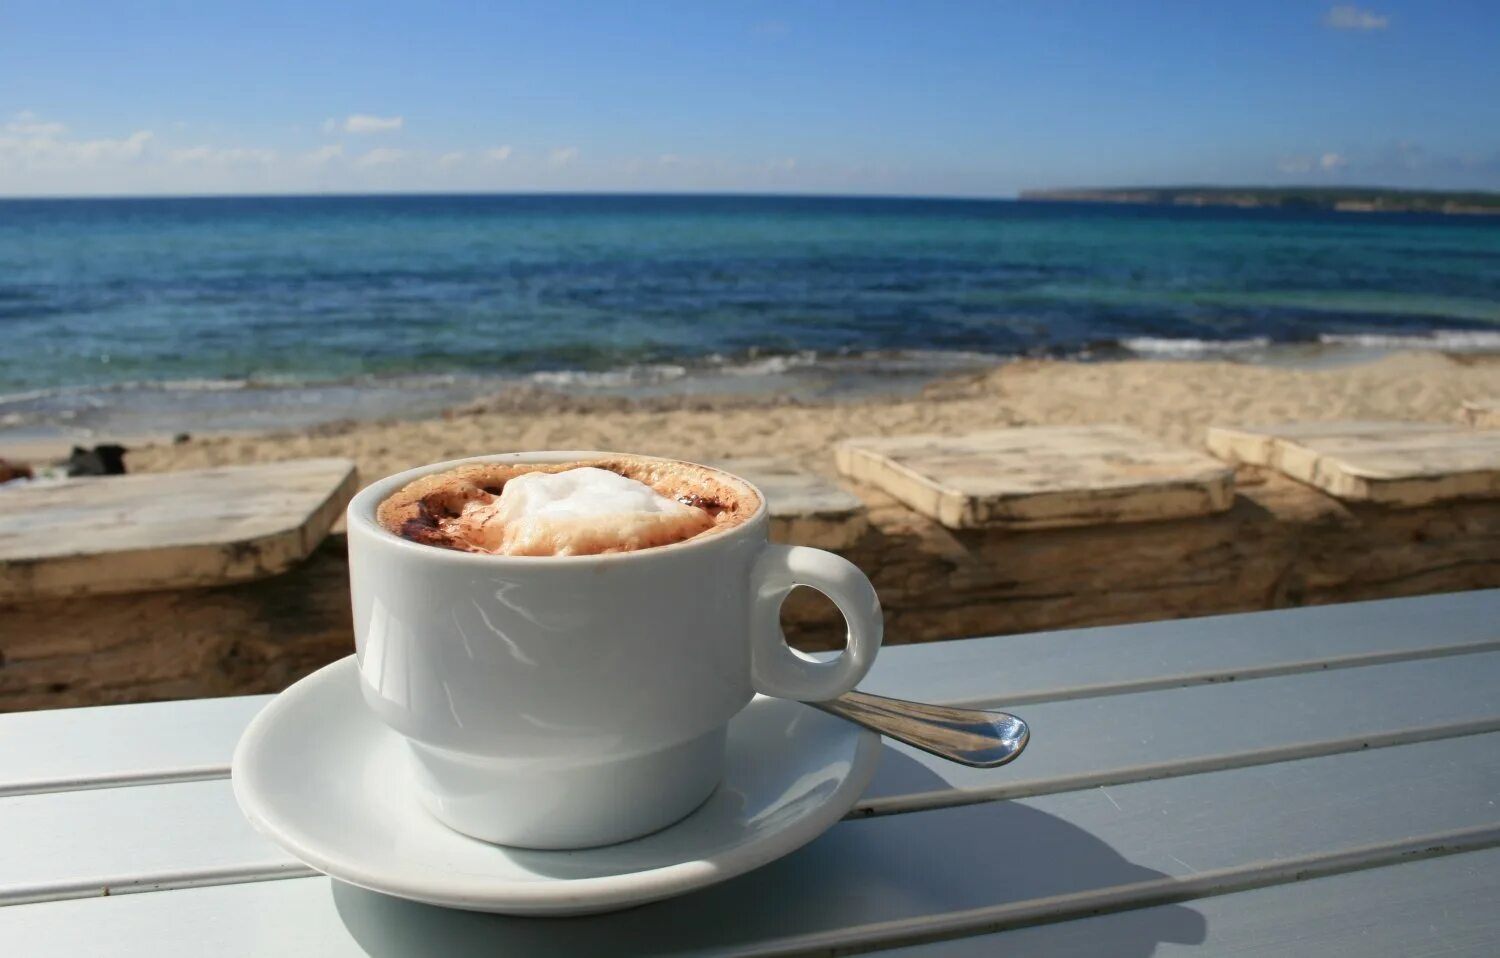 Утро ди. Чашка кофе на берегу моря. Утро на море. Утро на море с кофе. Завтрак с видом на море.